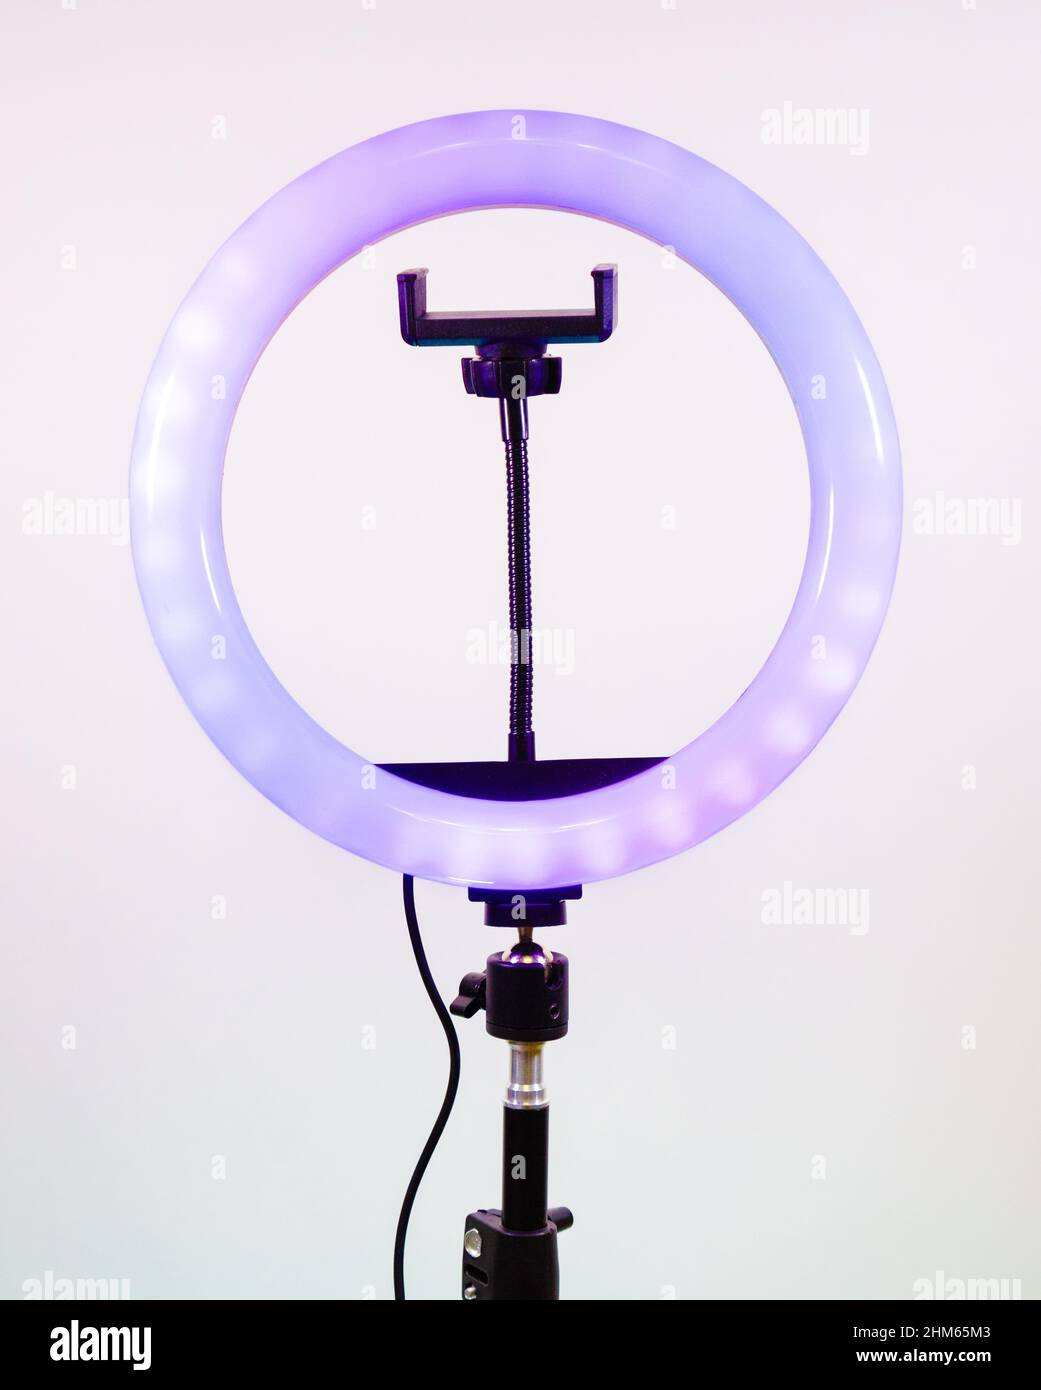 Ring lamp with phone holder. Purple light. Stock Photo